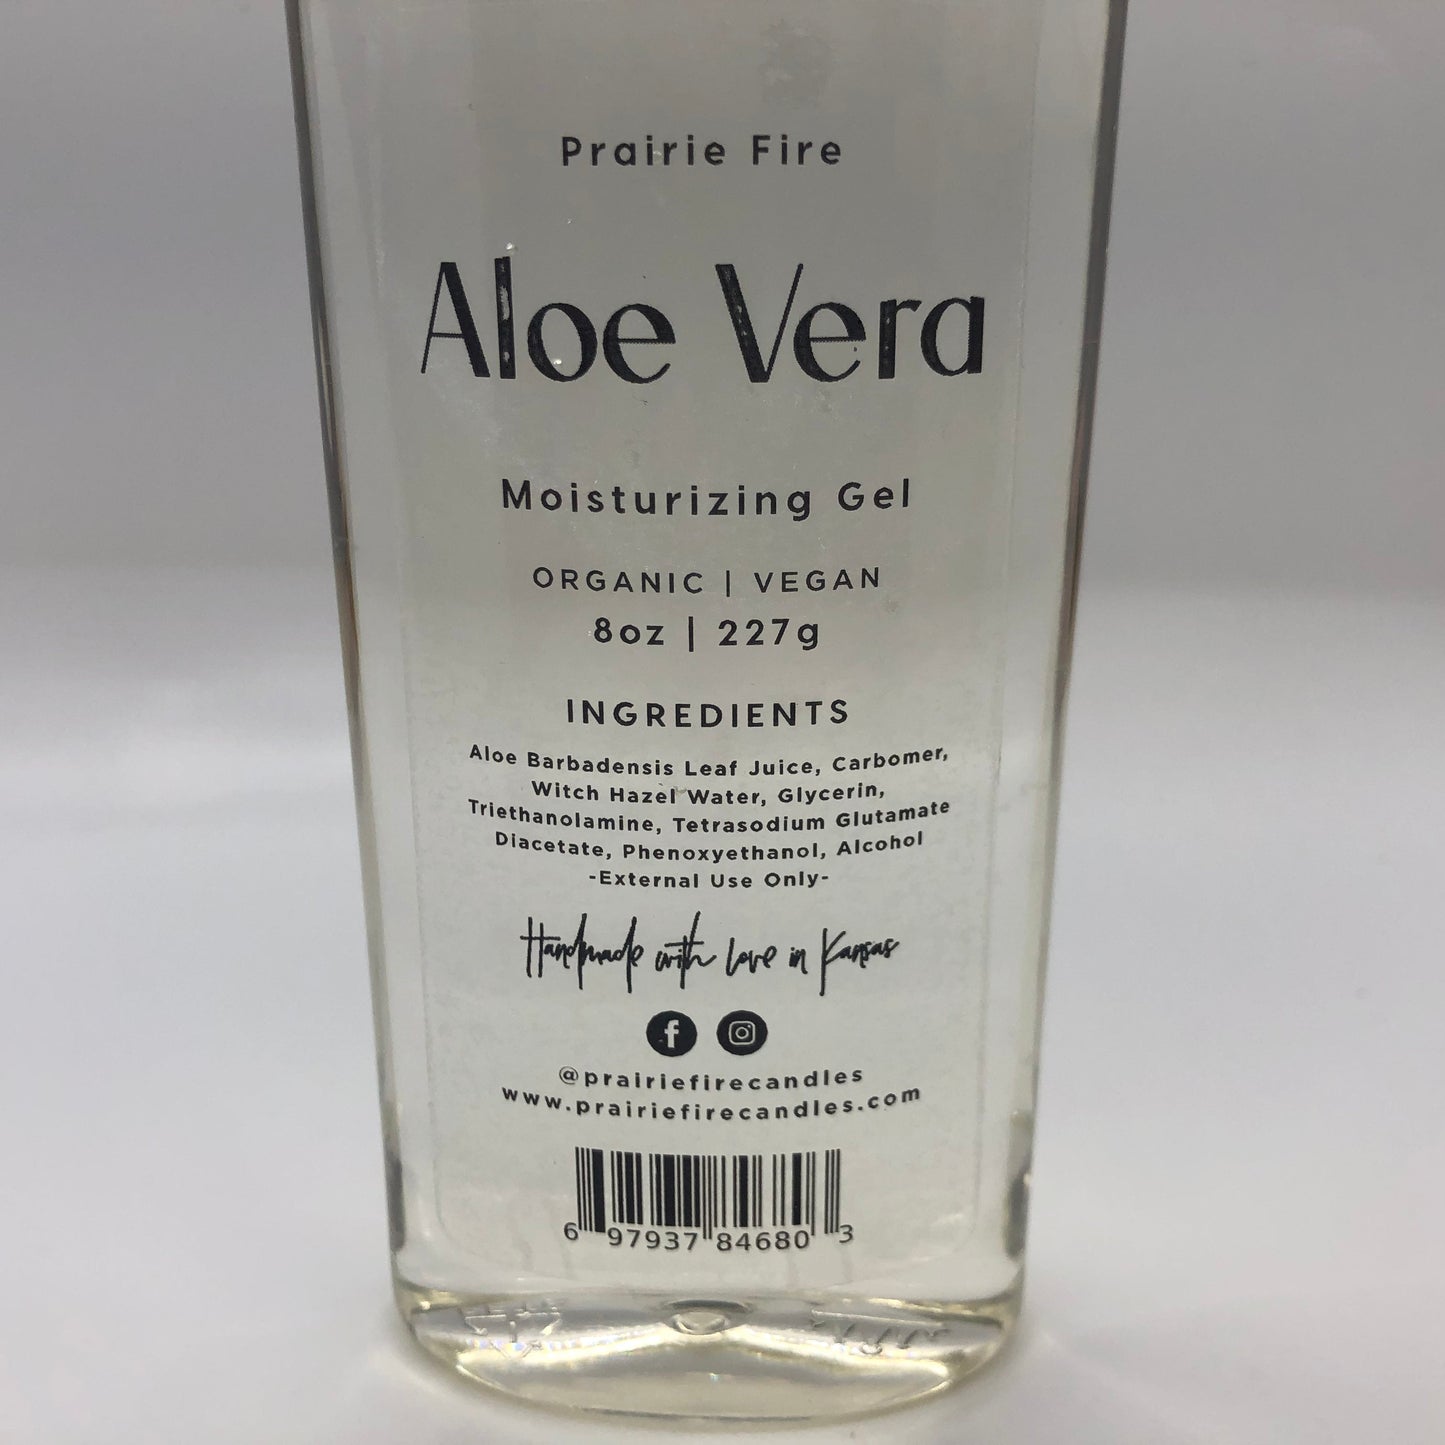 Aloe Vera Moisturizing Gel - 8 oz